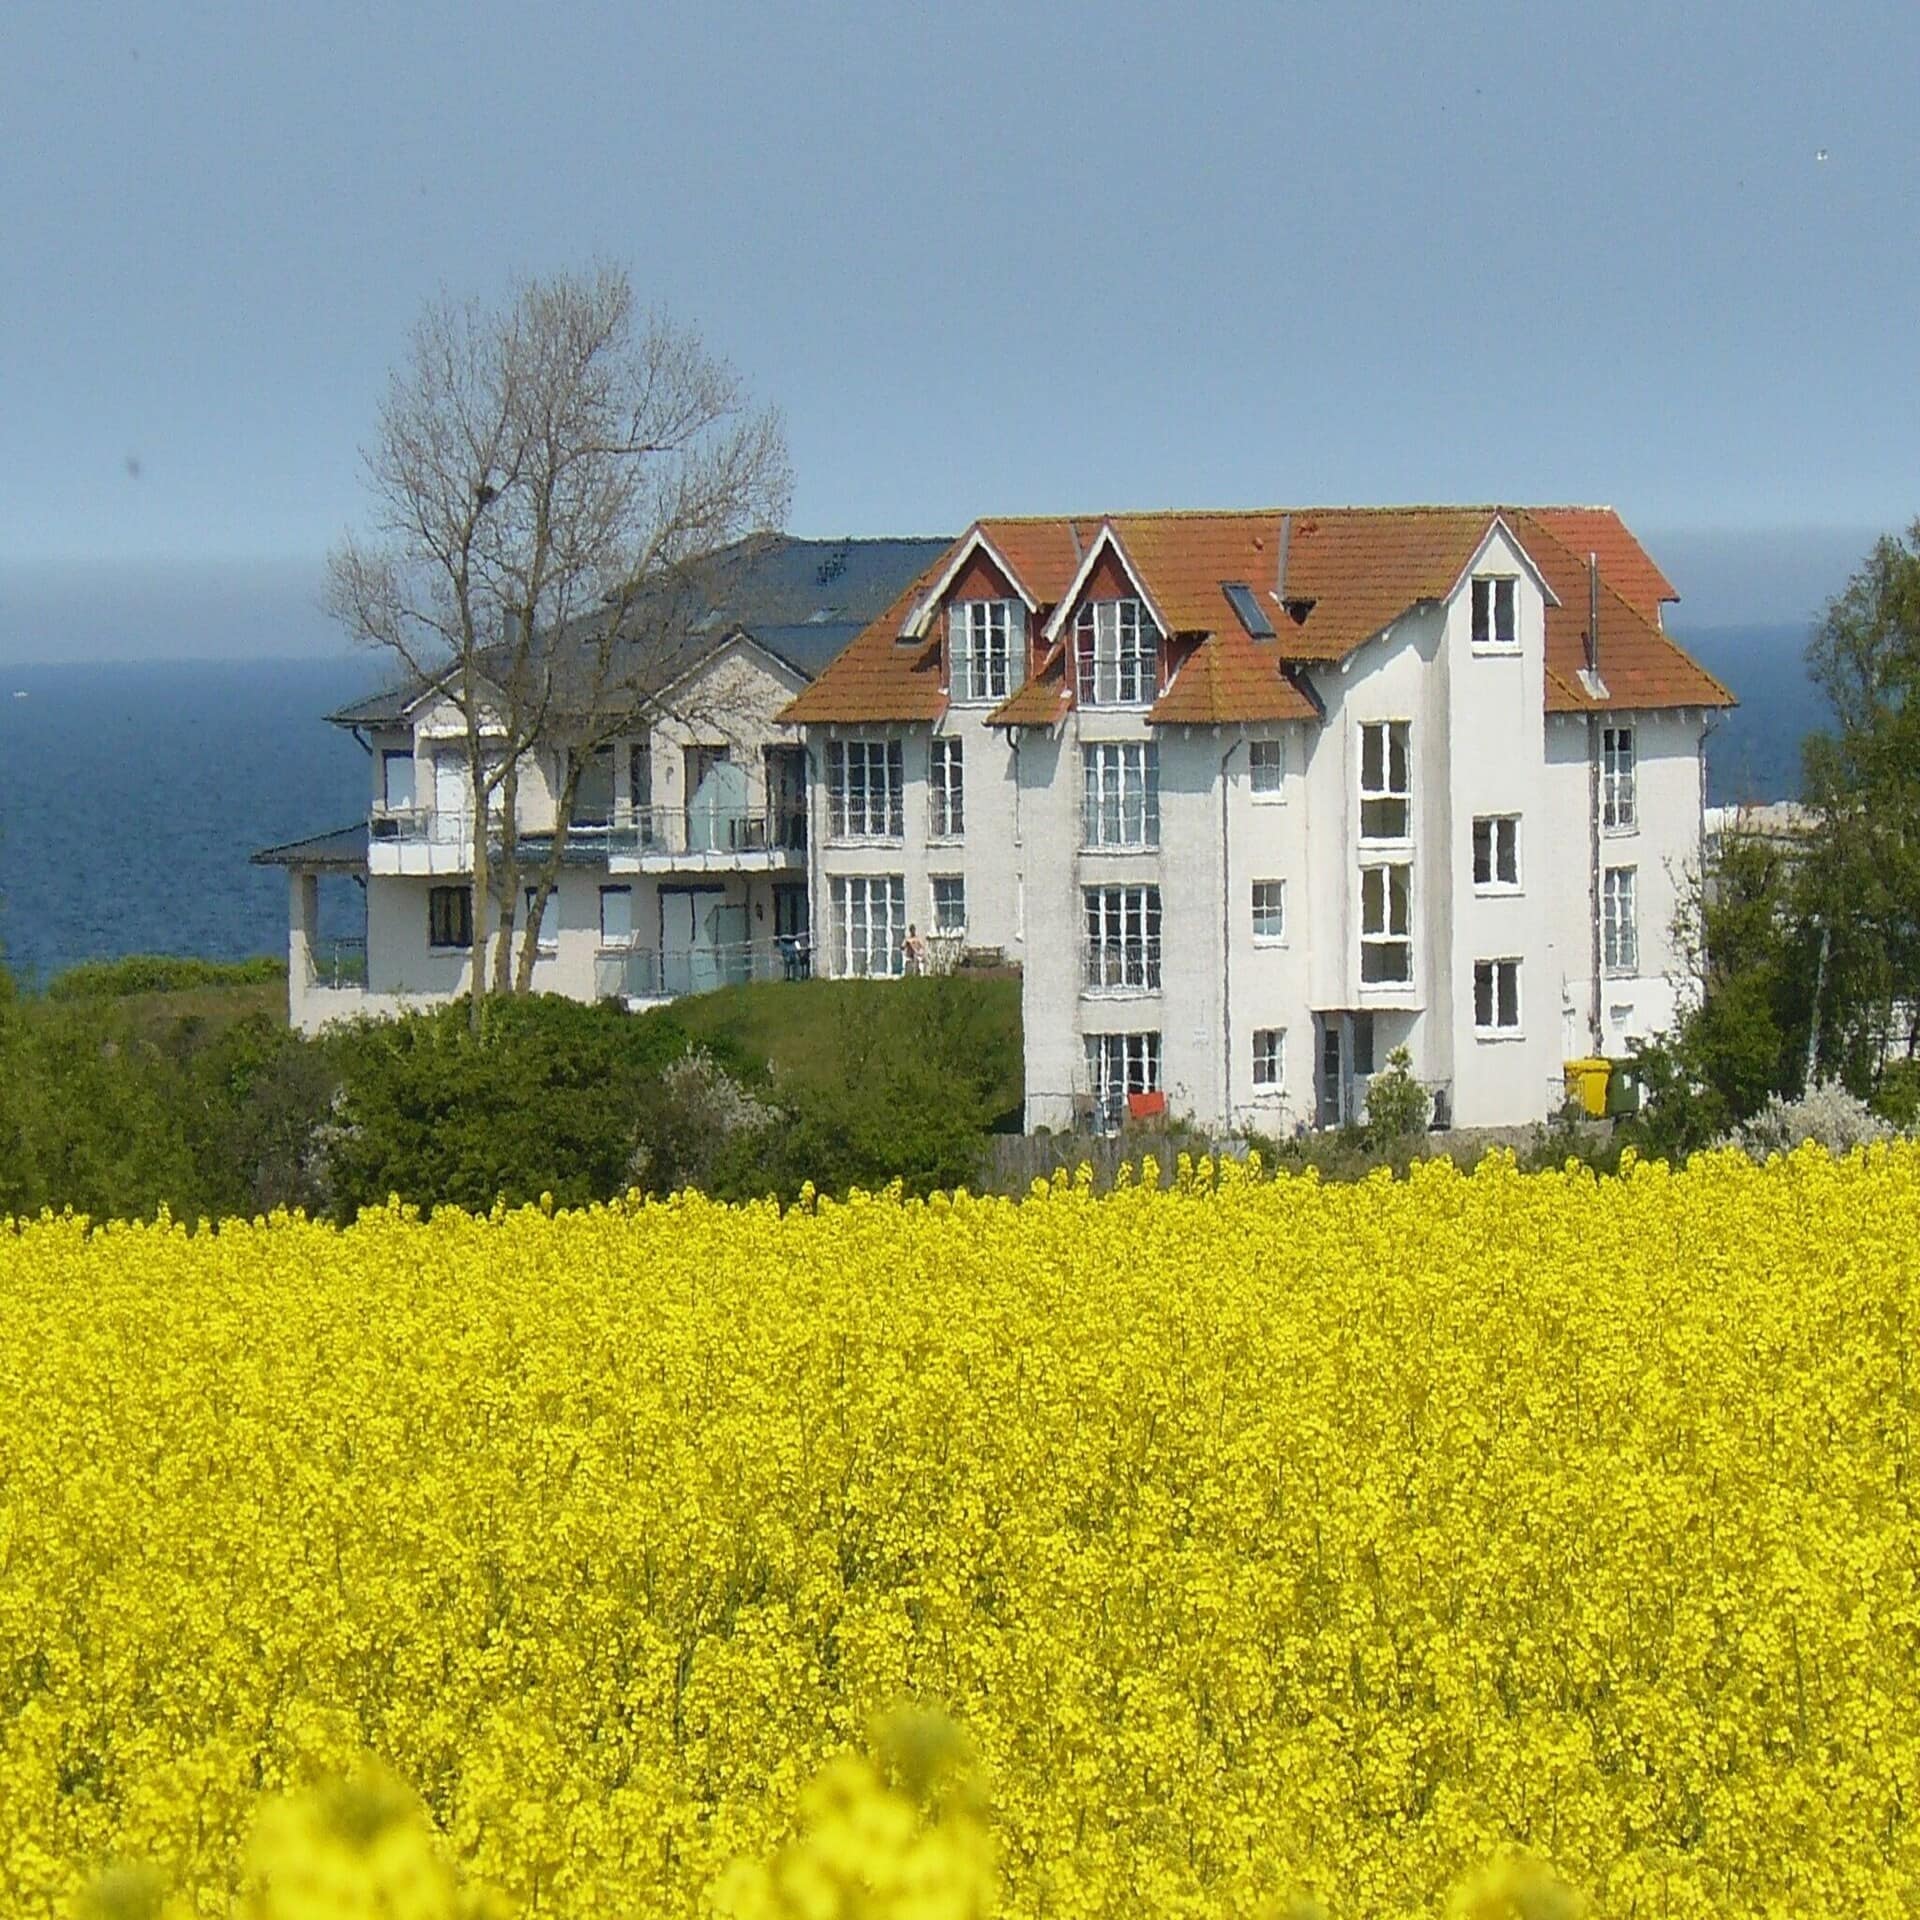 Blühendes Rapsfeld, dahinter Mehrfamilienhäuser und das Meer.